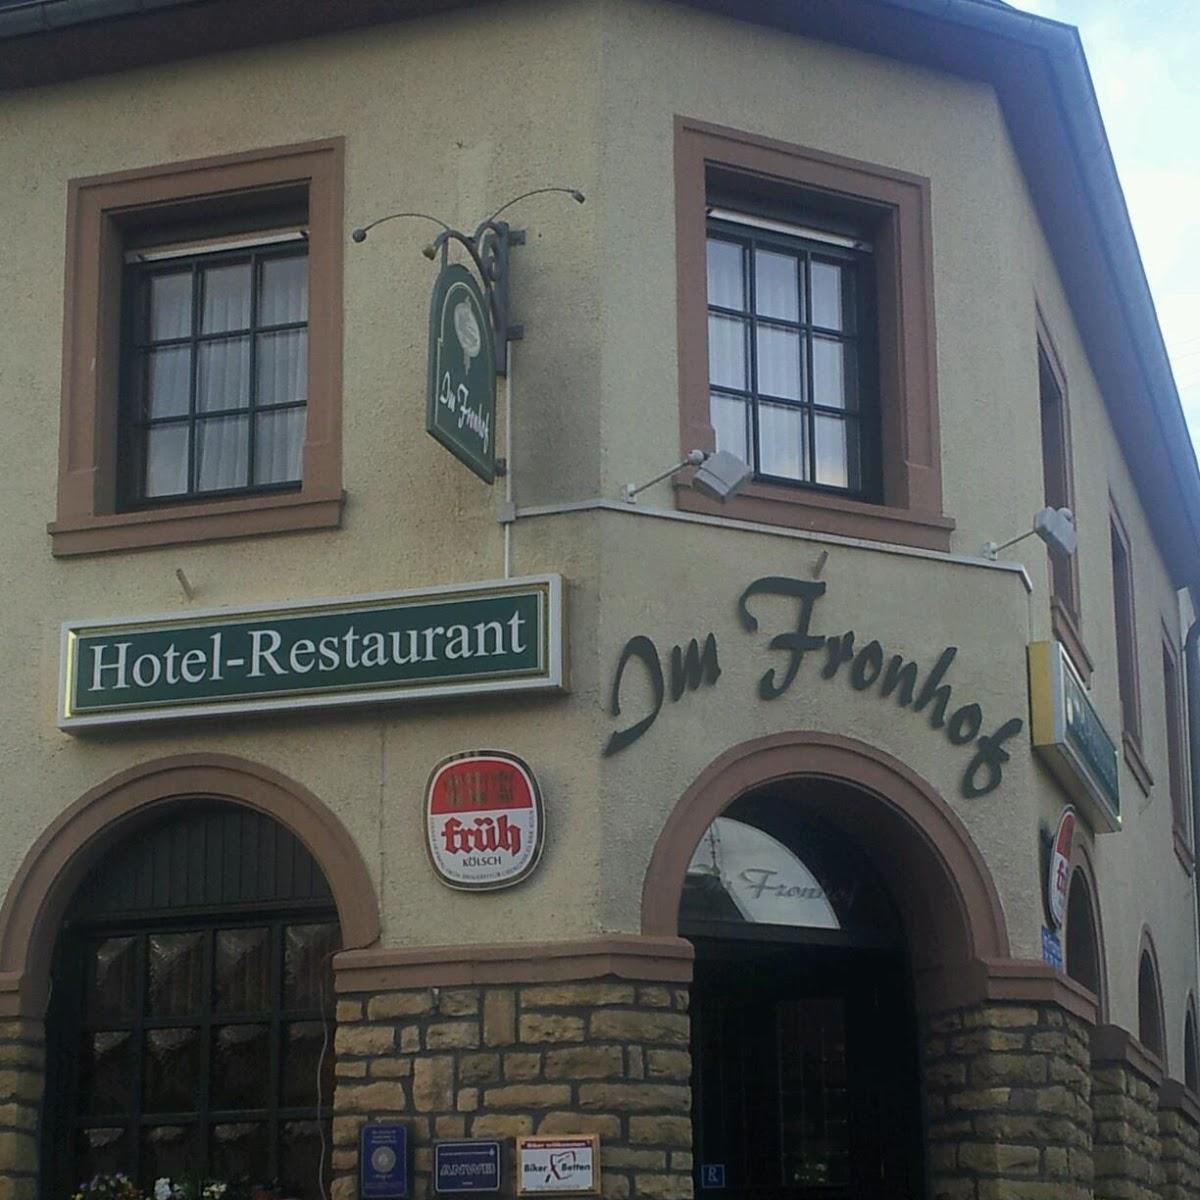 Restaurant "Restaurant Eifelhotel Im Fronhof" in Mettendorf